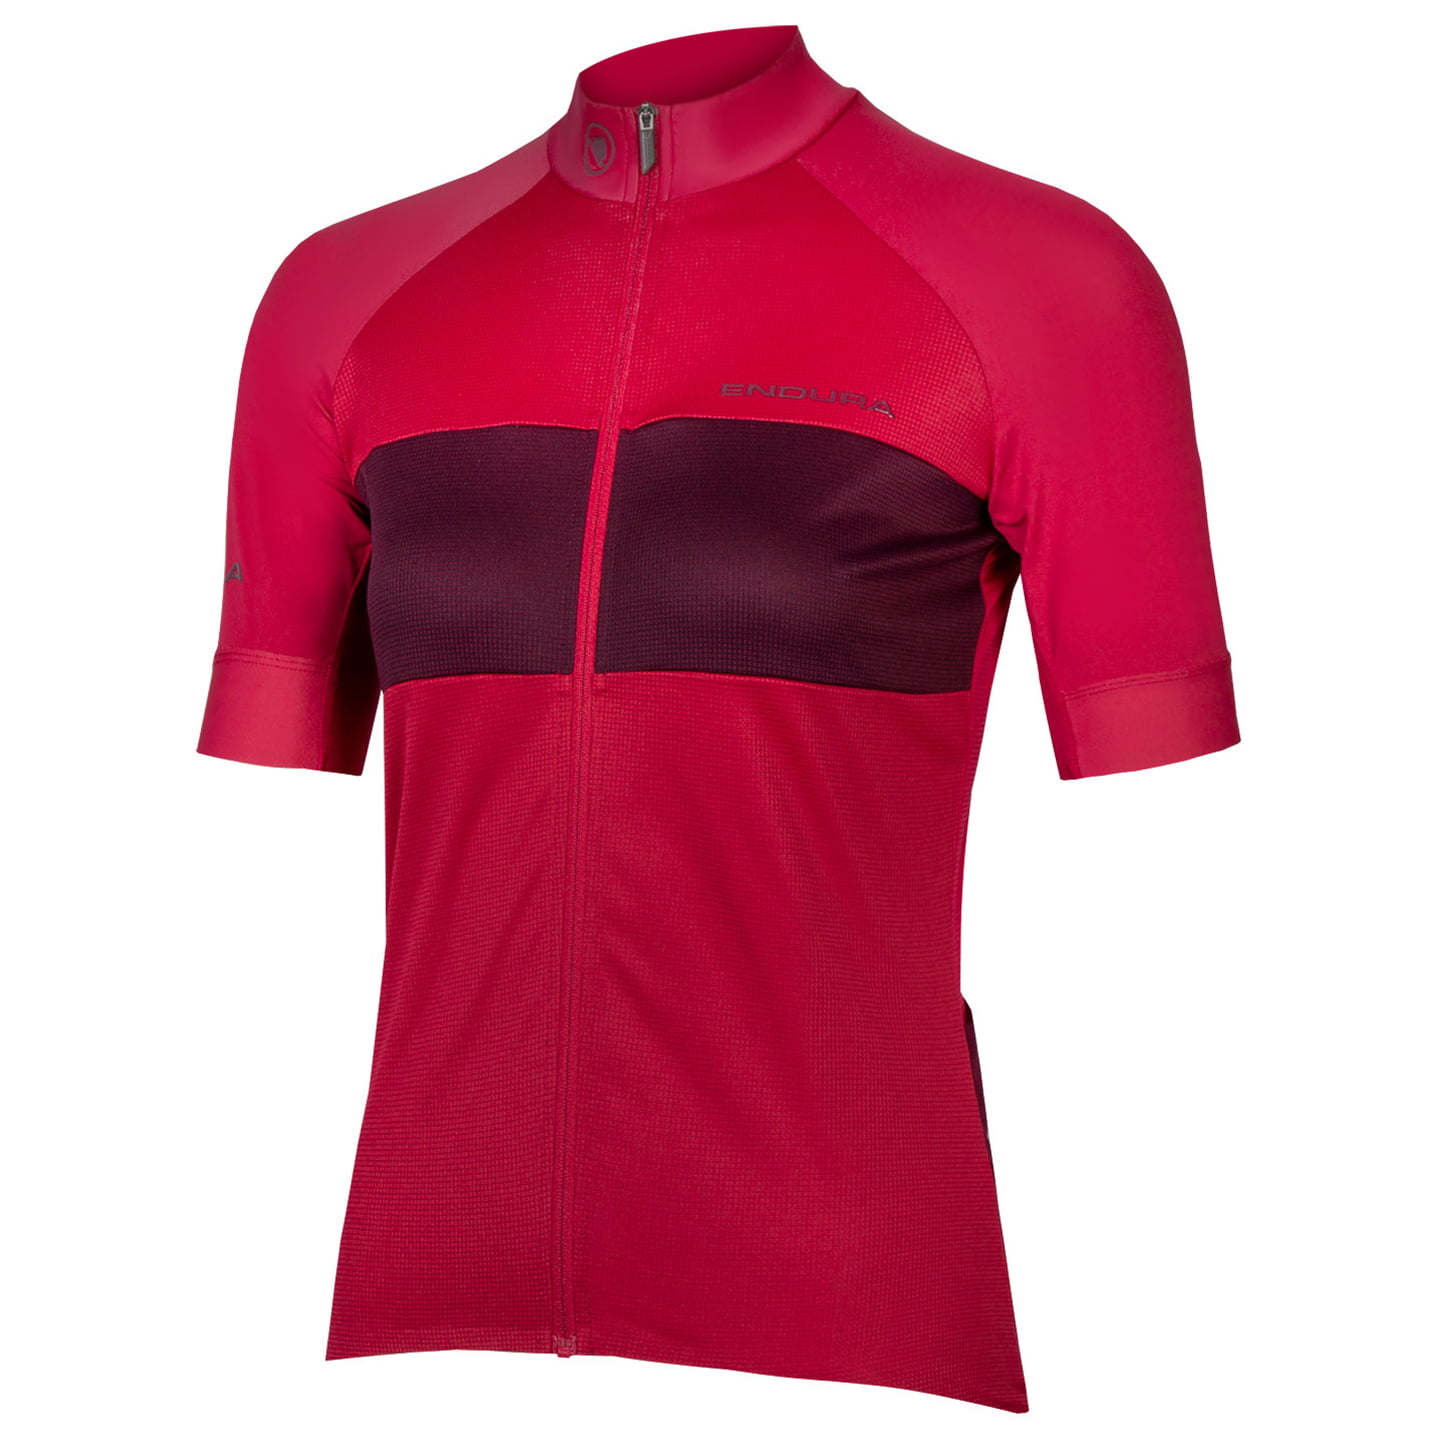 ENDURA FS260-Pro II Women’s Short Sleeve Jersey Women’s Short Sleeve Jersey, size M, Cycling jersey, Cycle clothing